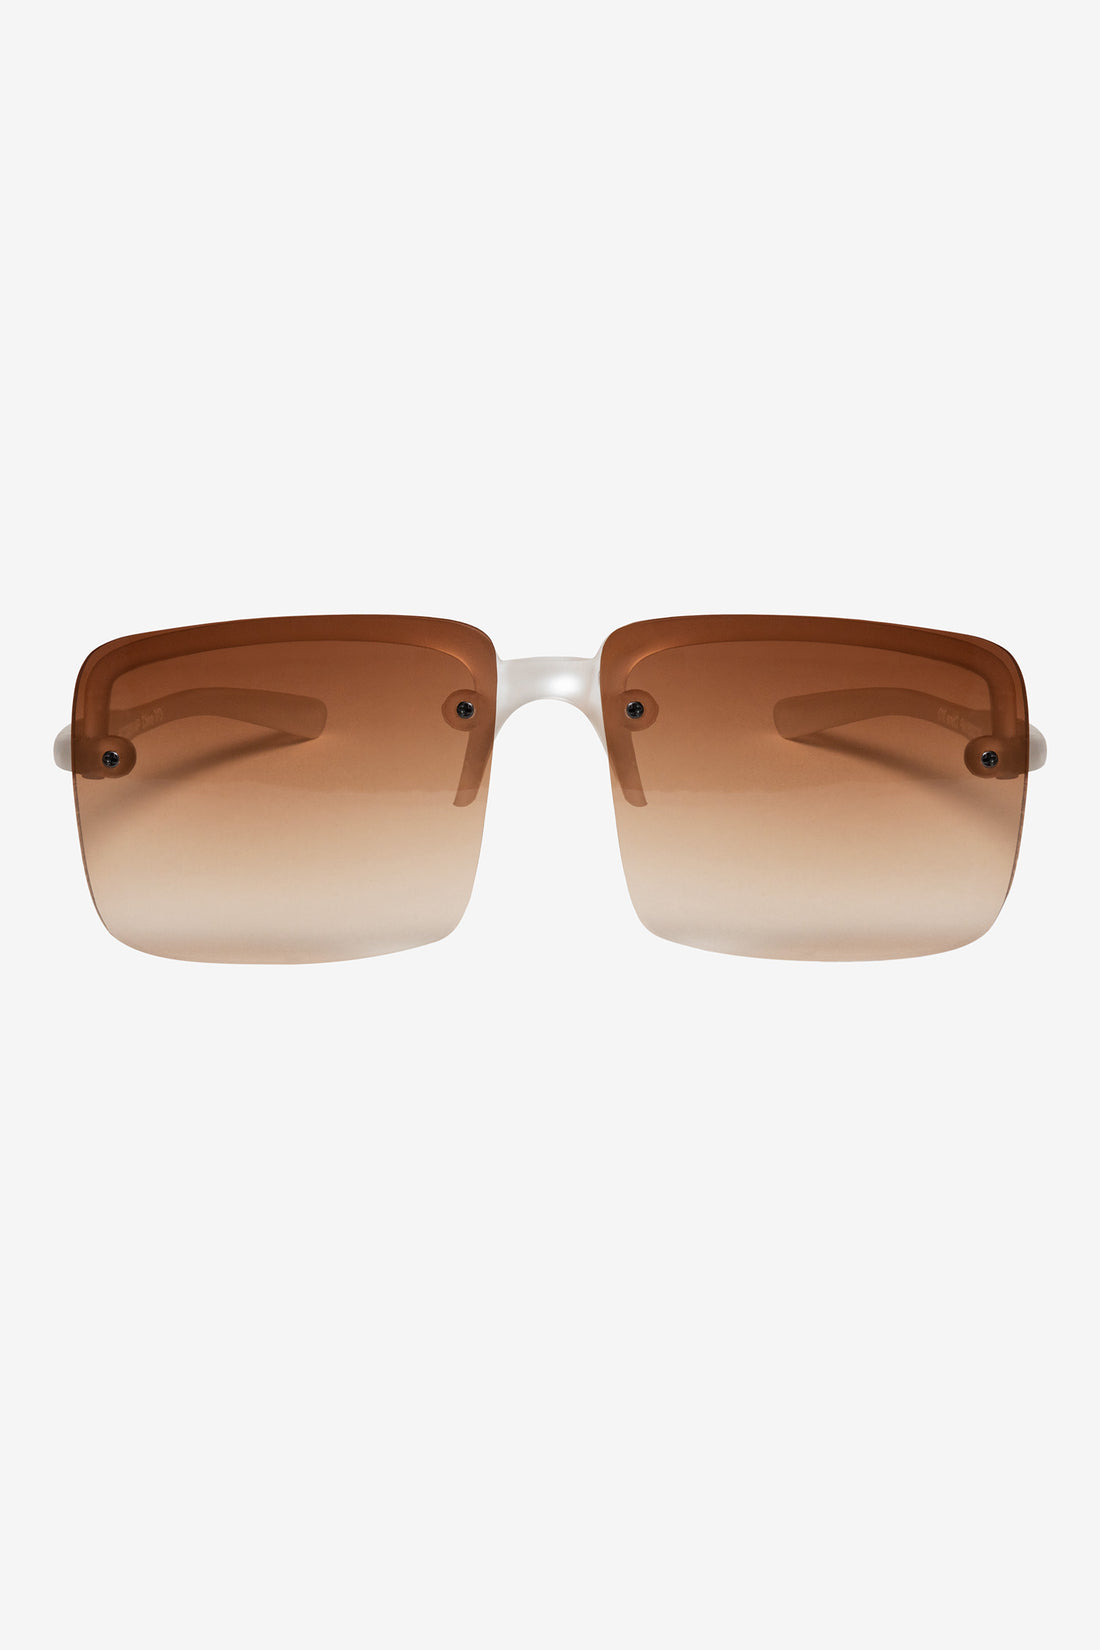 SGVN100 - Big Foxy Sunglasses – Los Angeles Apparel